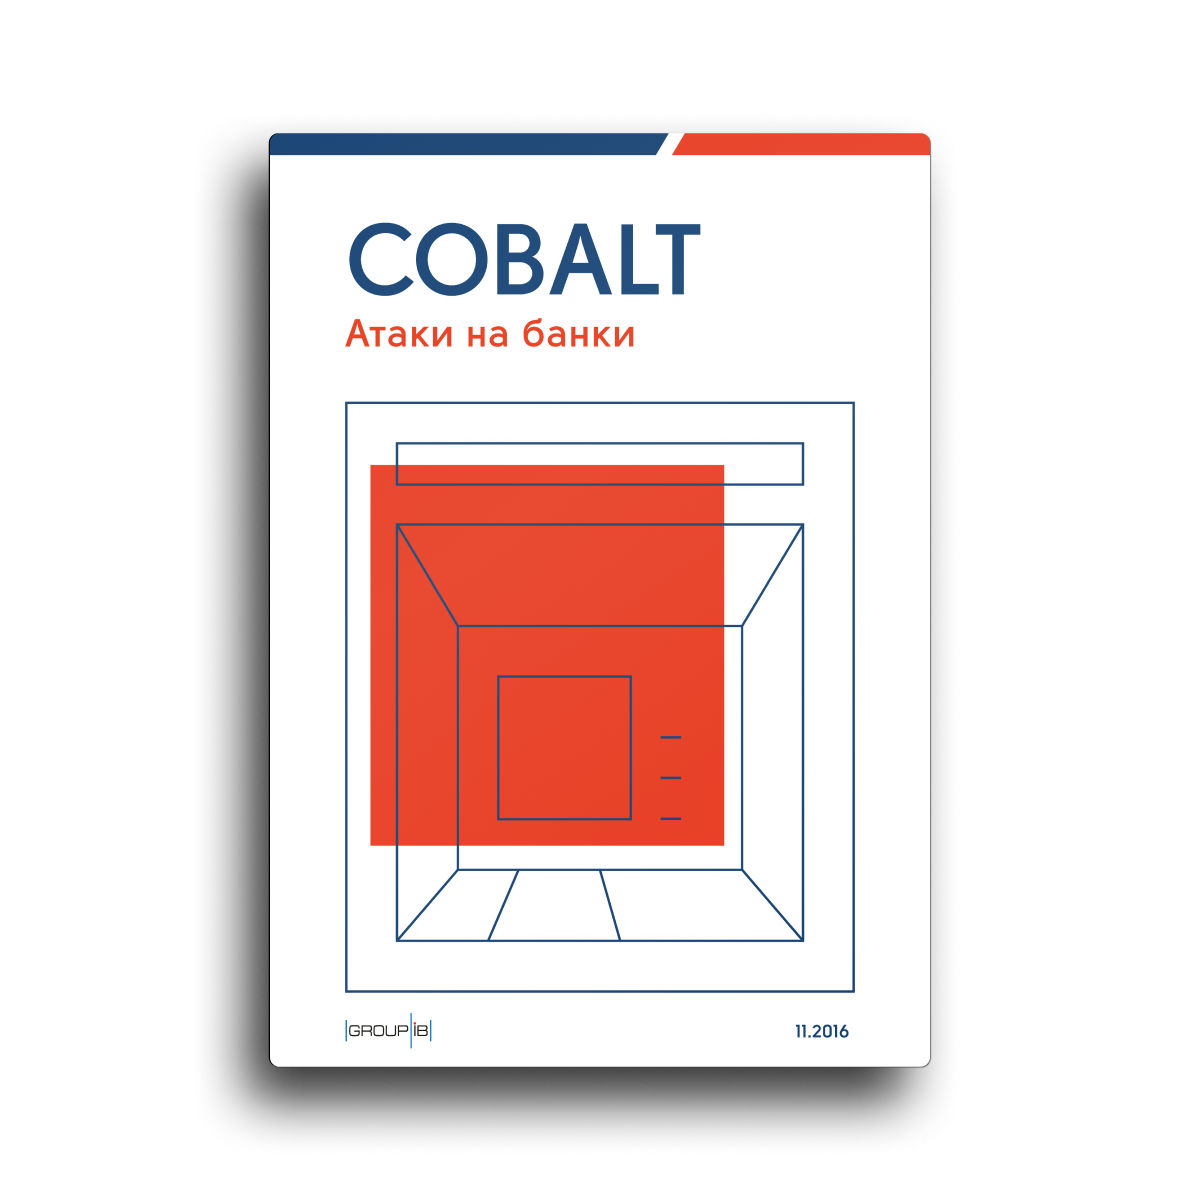 Cobalt: атаки на банки